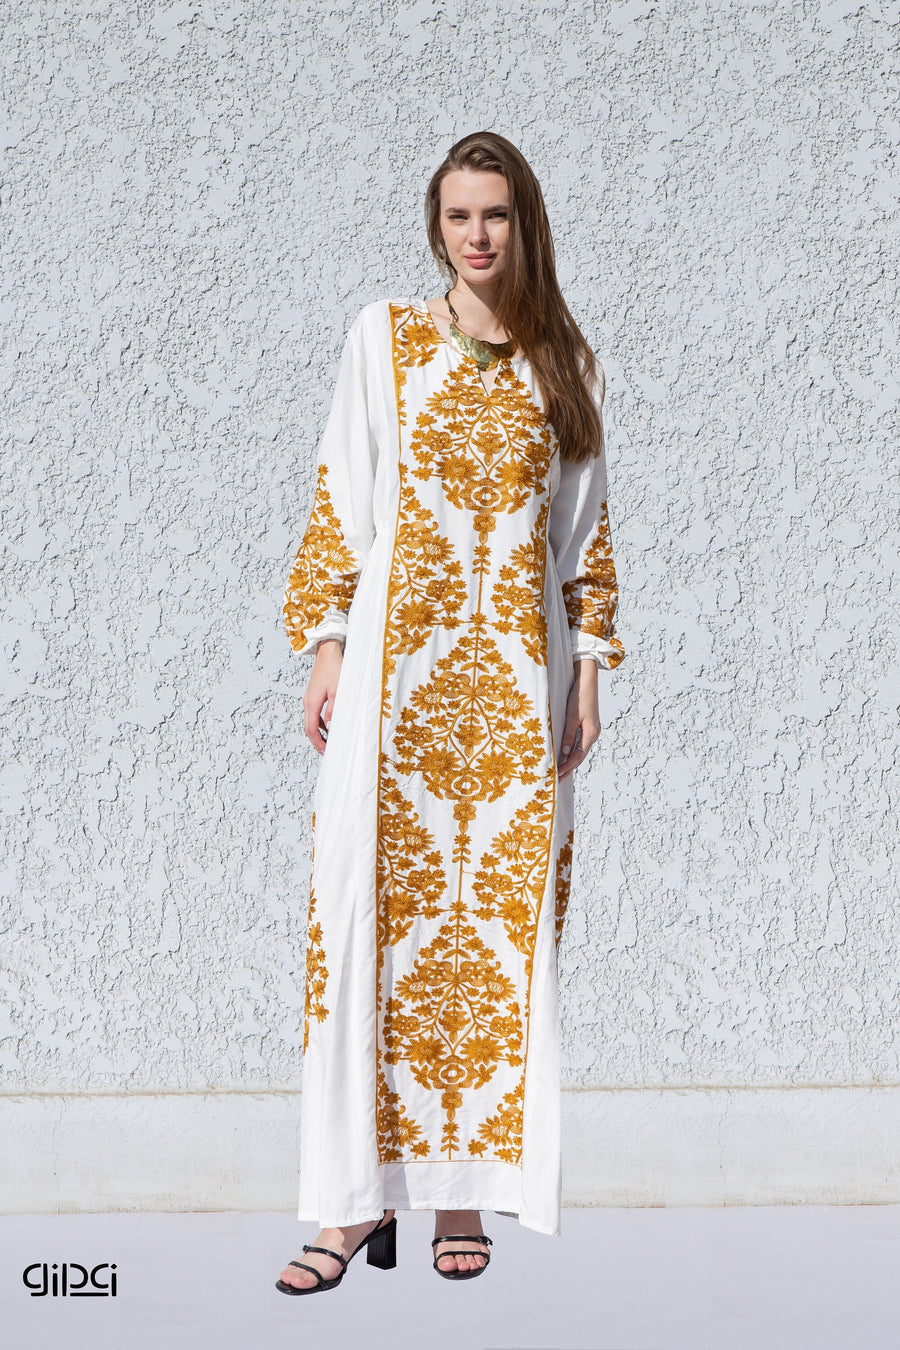 Elegant white cream embroidered kaftan dress, Cotton caftan women, Long sleeve caftan, Chic embroidered caftan, High quality Egyptian cotton